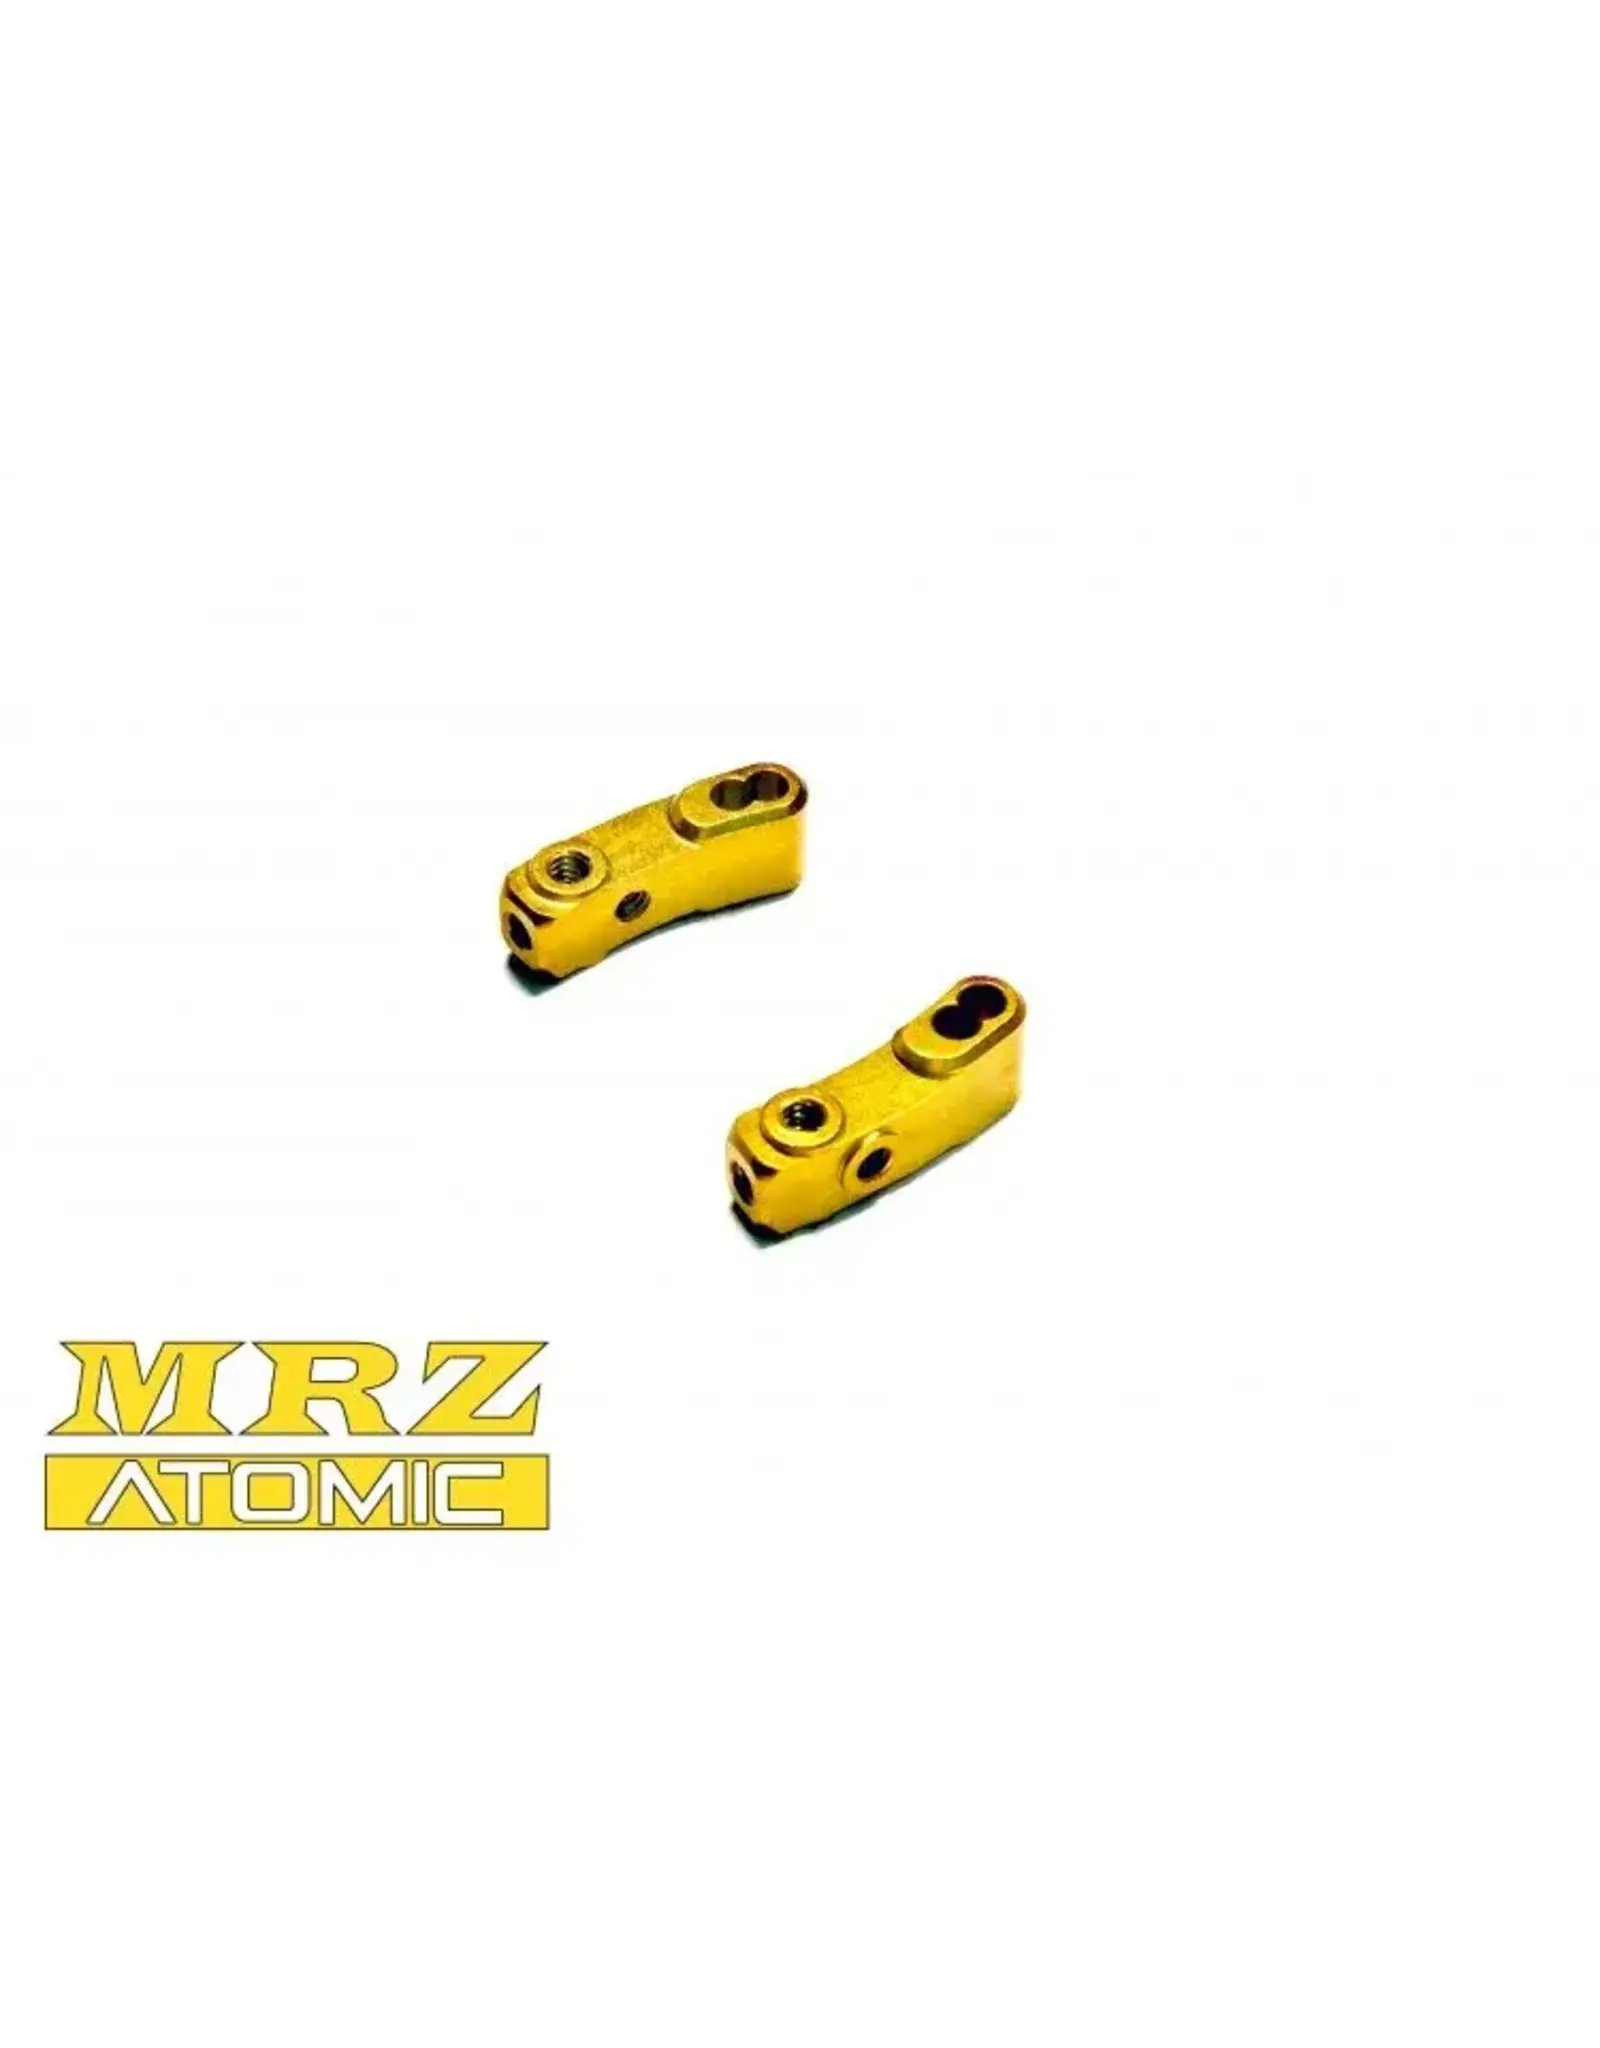 Atomic MRZ Aluminum Knuckle - Atomic (gold)